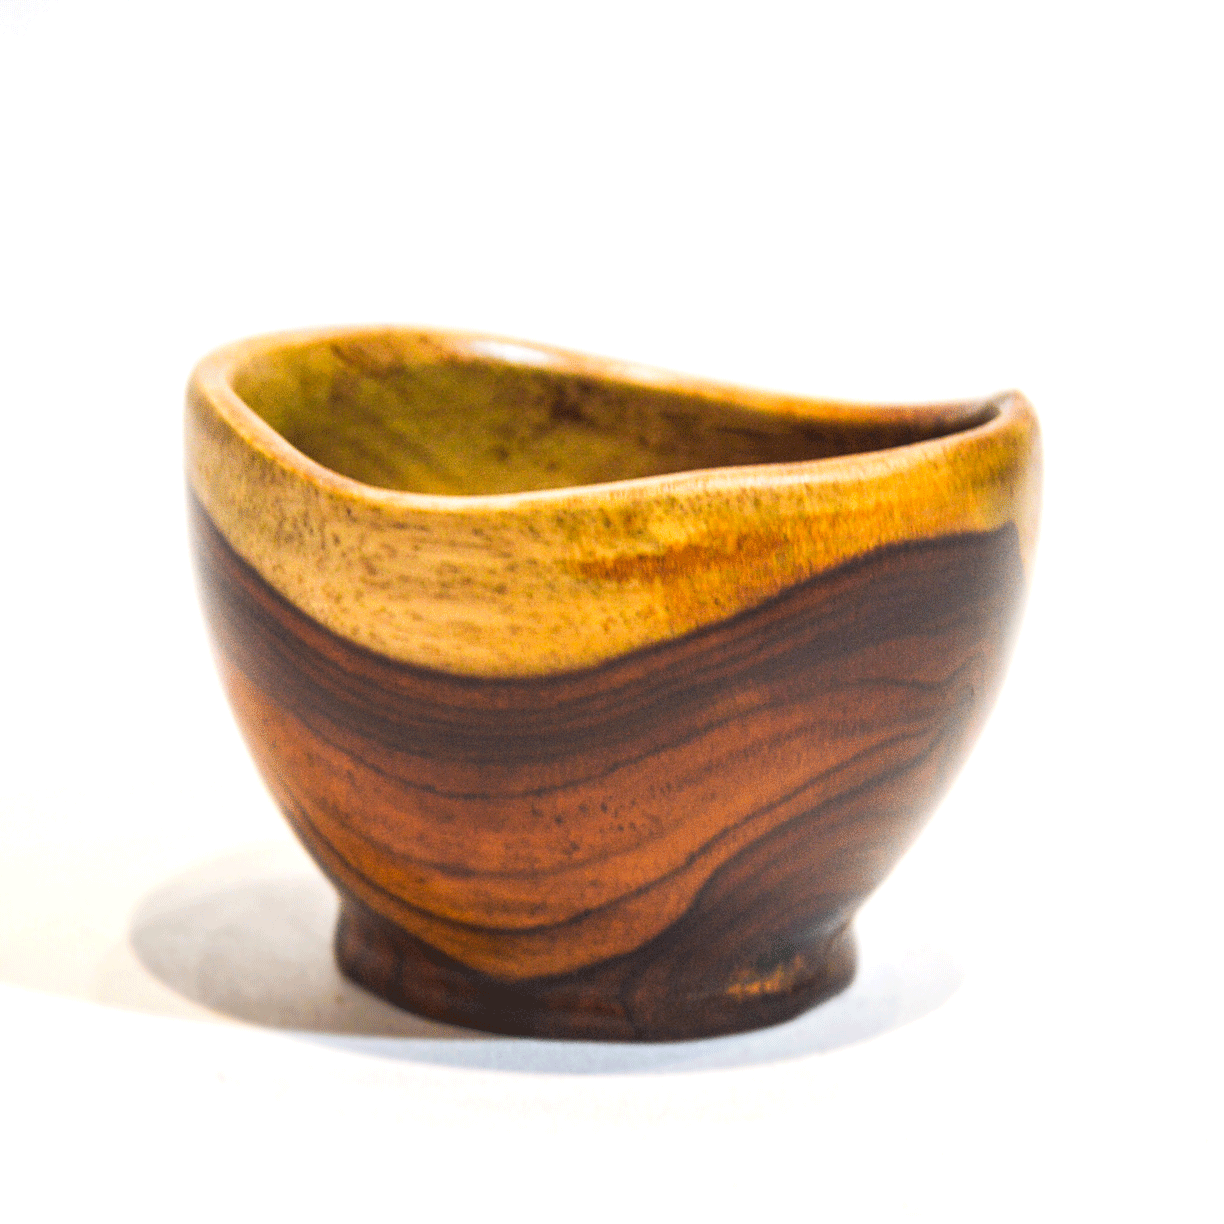 www.costaricacongo.com www.costaricagiftshops.com gift souvenir handmade Wooden bowl 3"